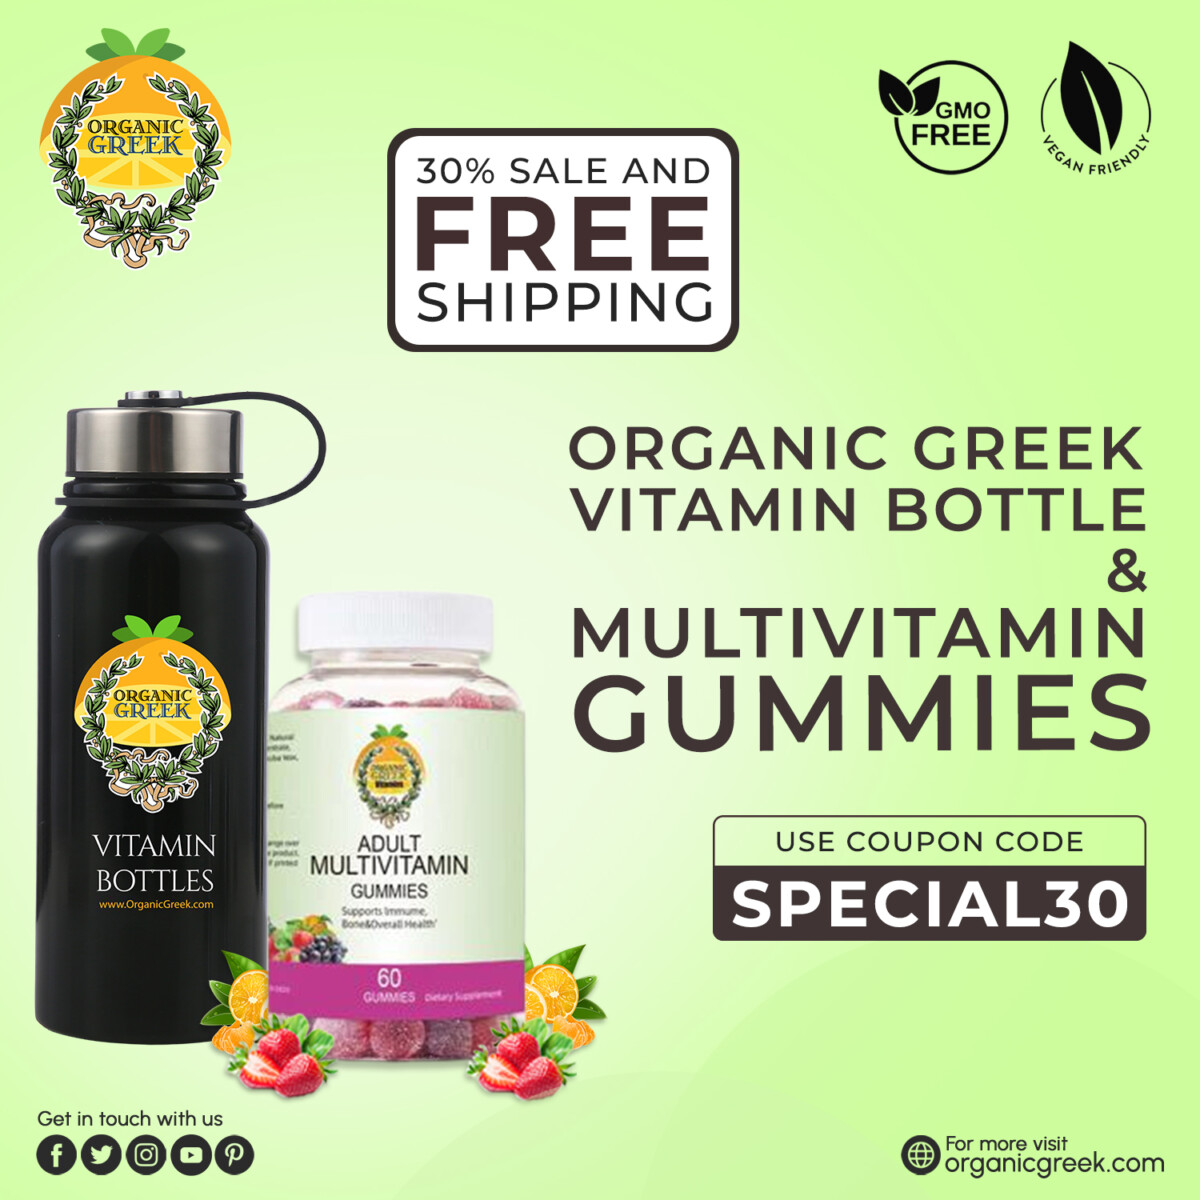 Organic Greek Vitamin Bottles and Multivitamin Gummies